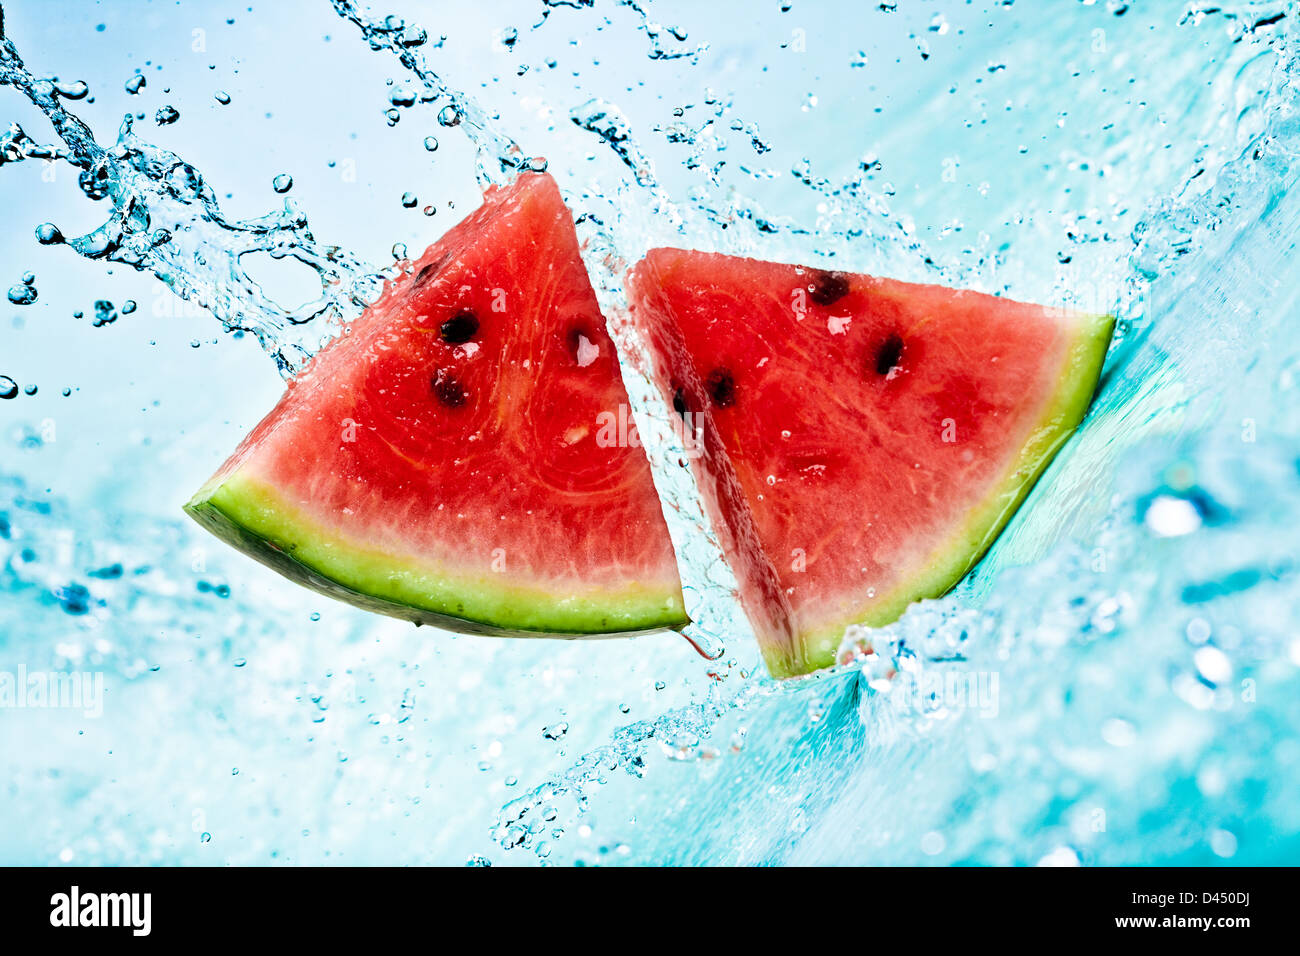 Watermelon splash and sinking isolated against white Stock Photo. fresh wat...